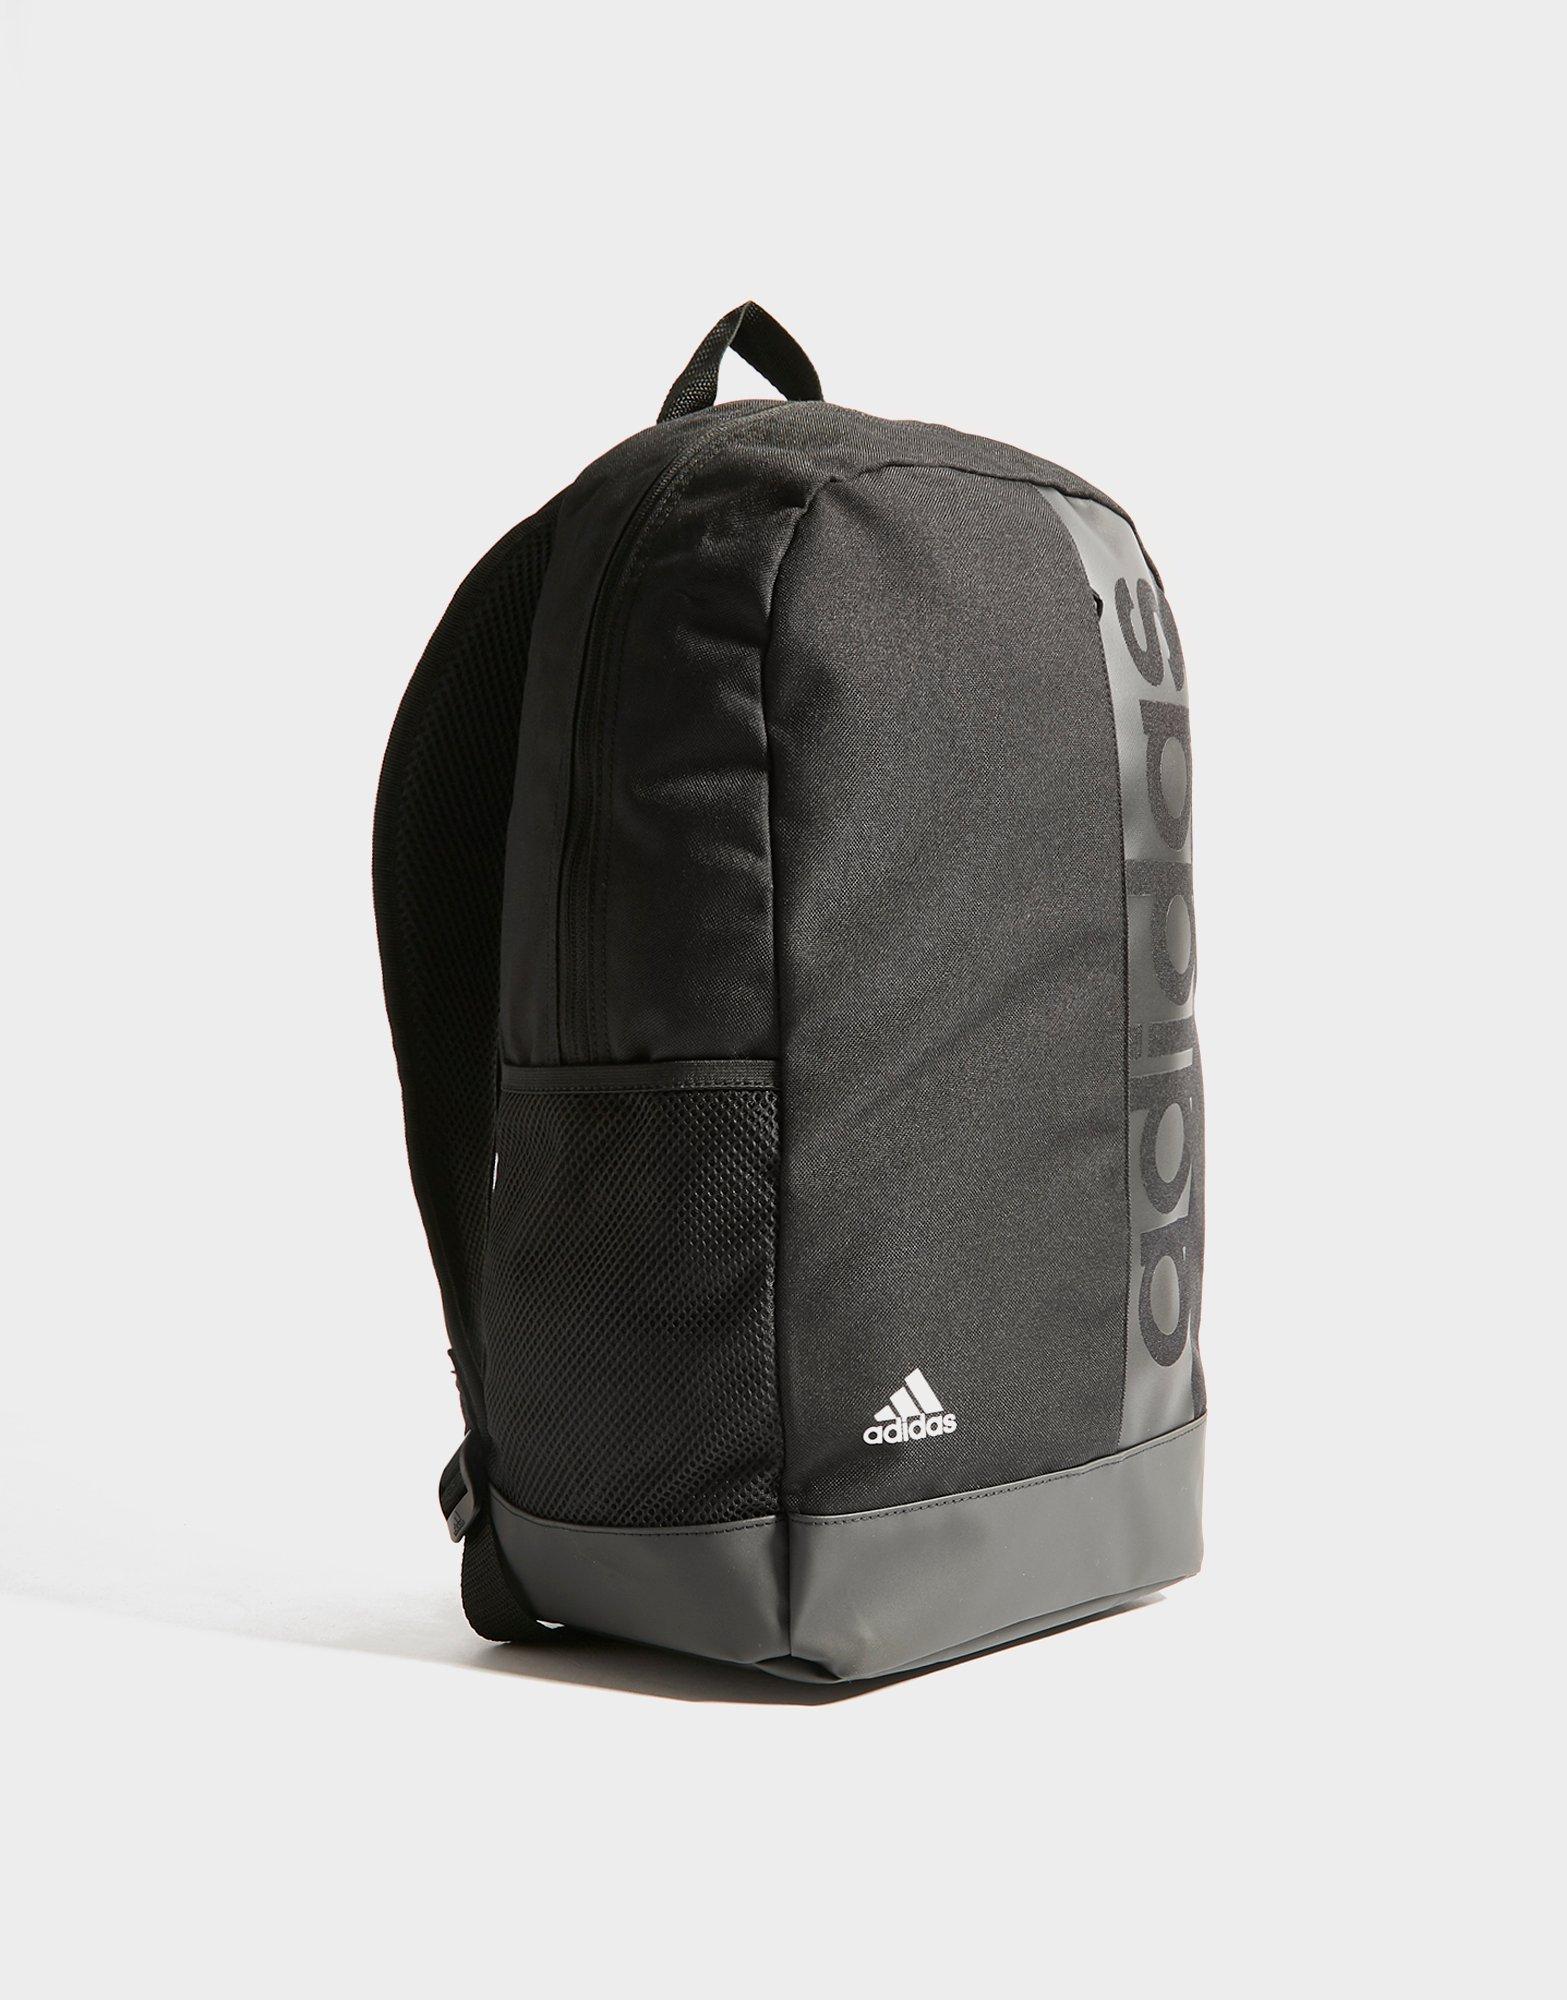 adidas backpack jd sports